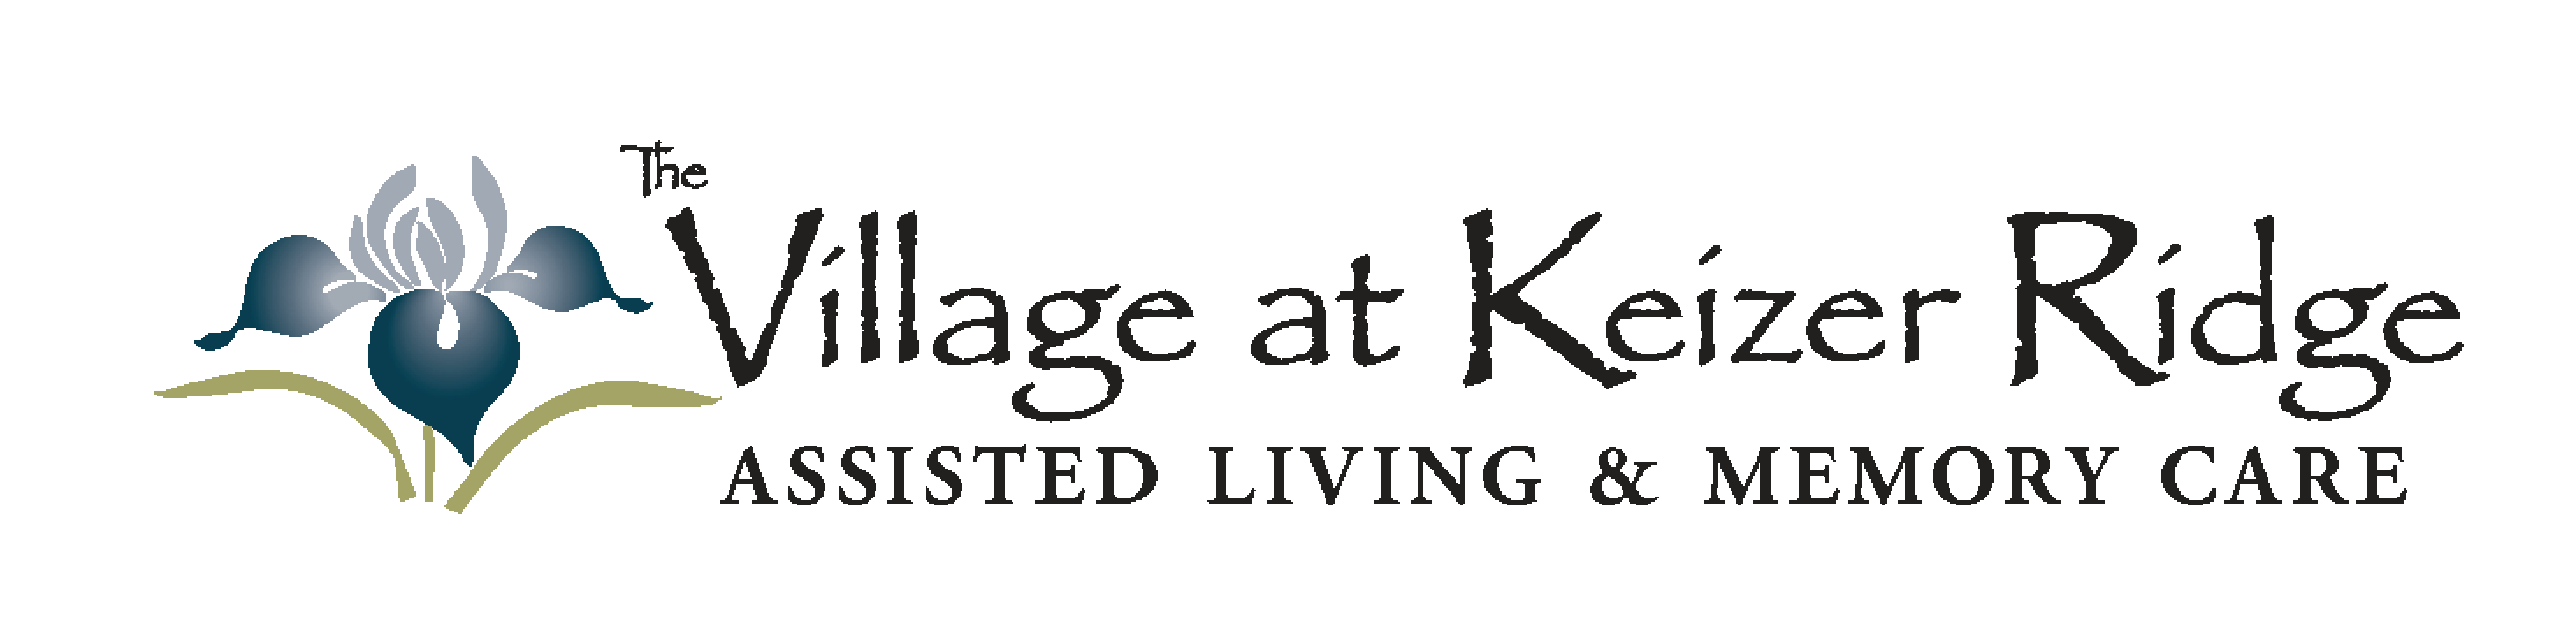 Fieldstone The Village at Keizer Ridge logo